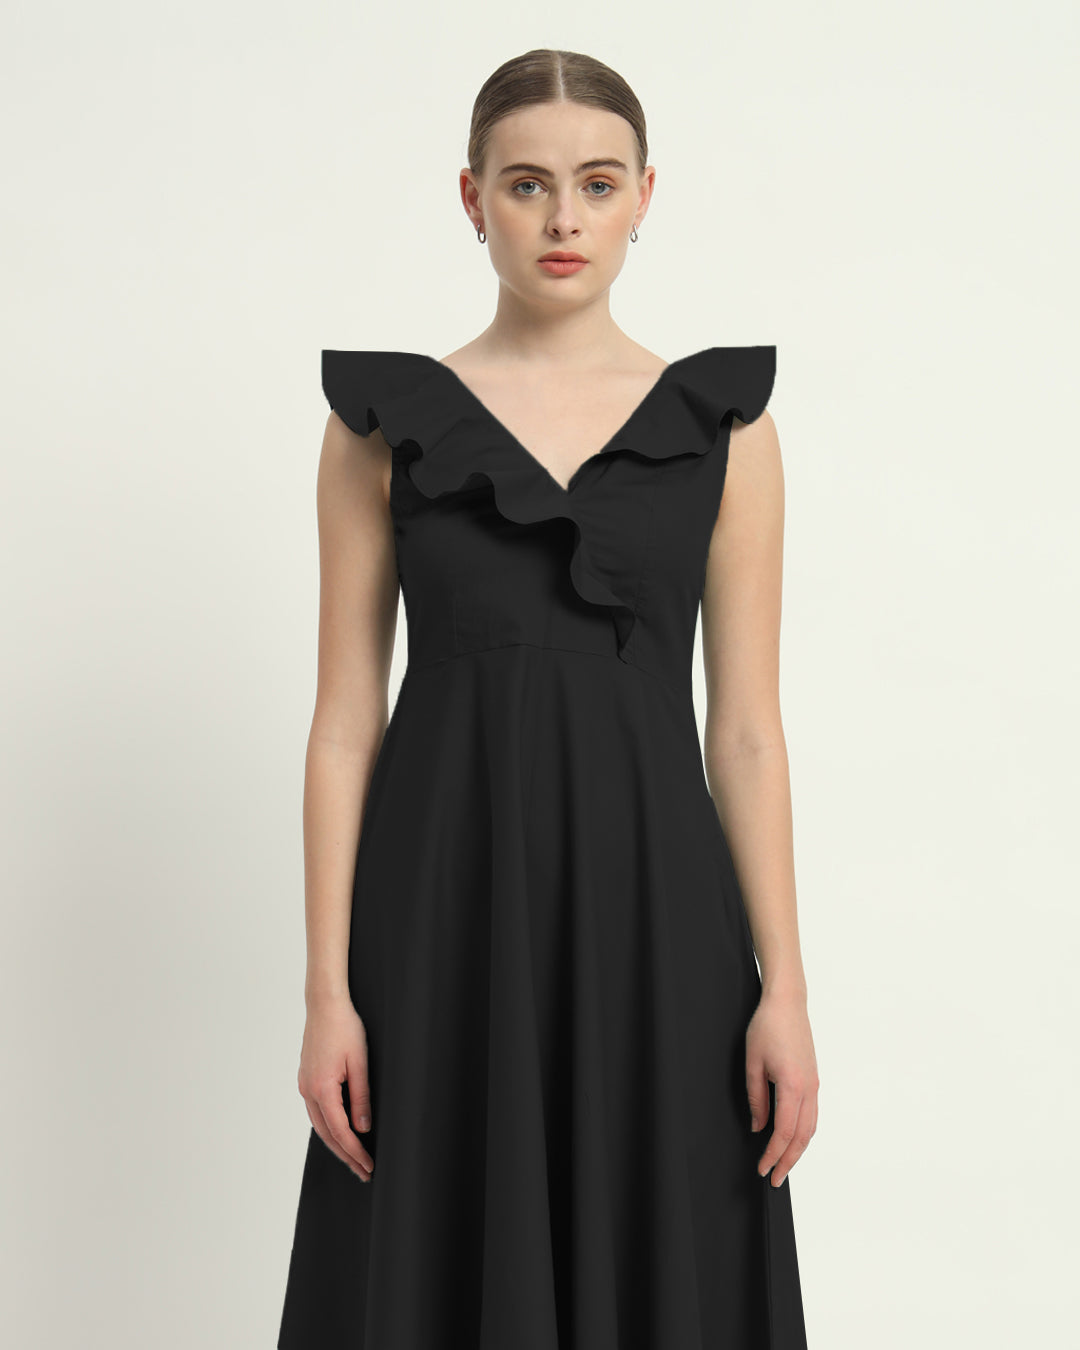 The Noir Albany Cotton Dress